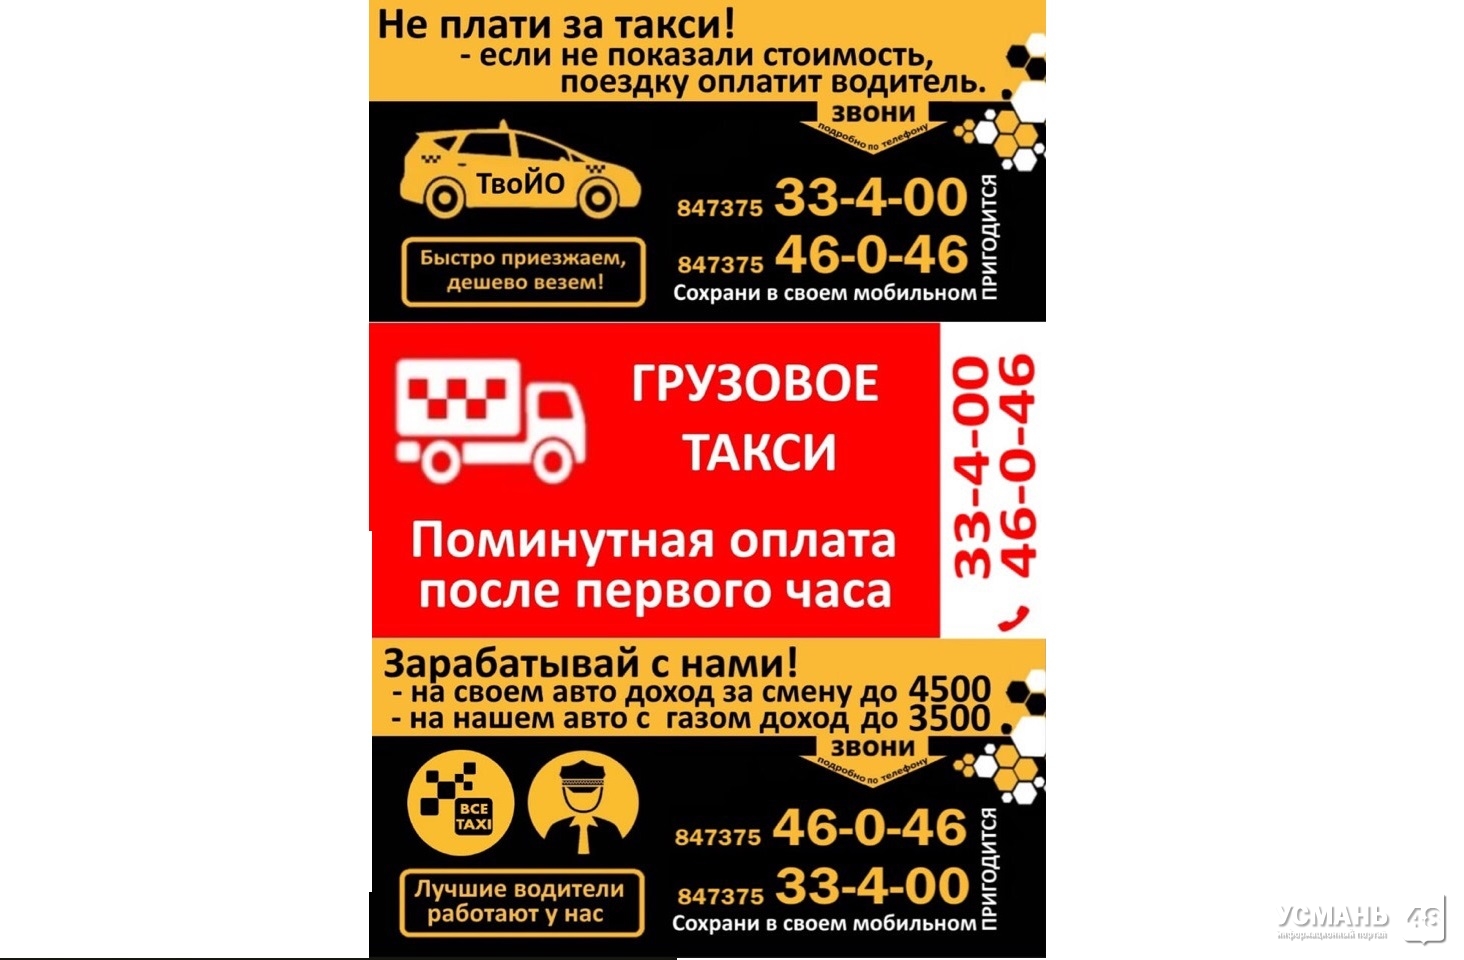 Служба заказа такси Славяне приглашают водителей